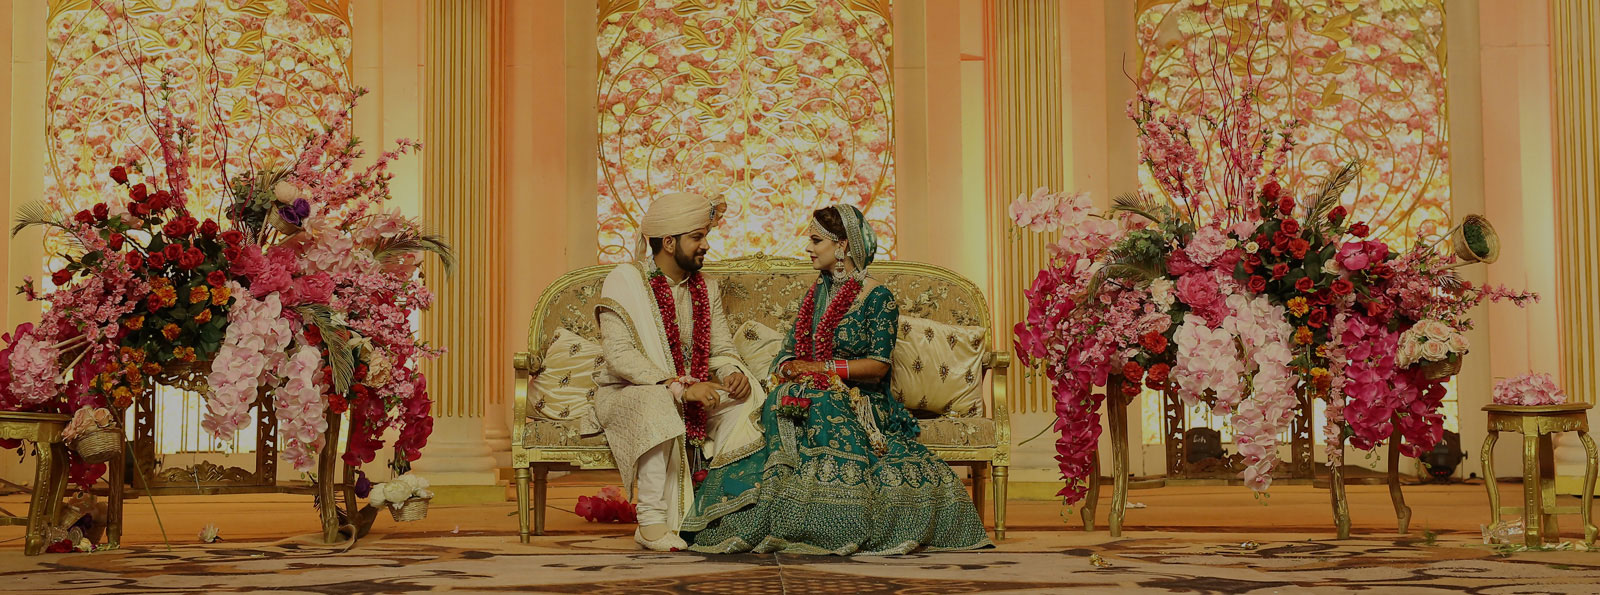 Best Wedding Photographers in Delhi